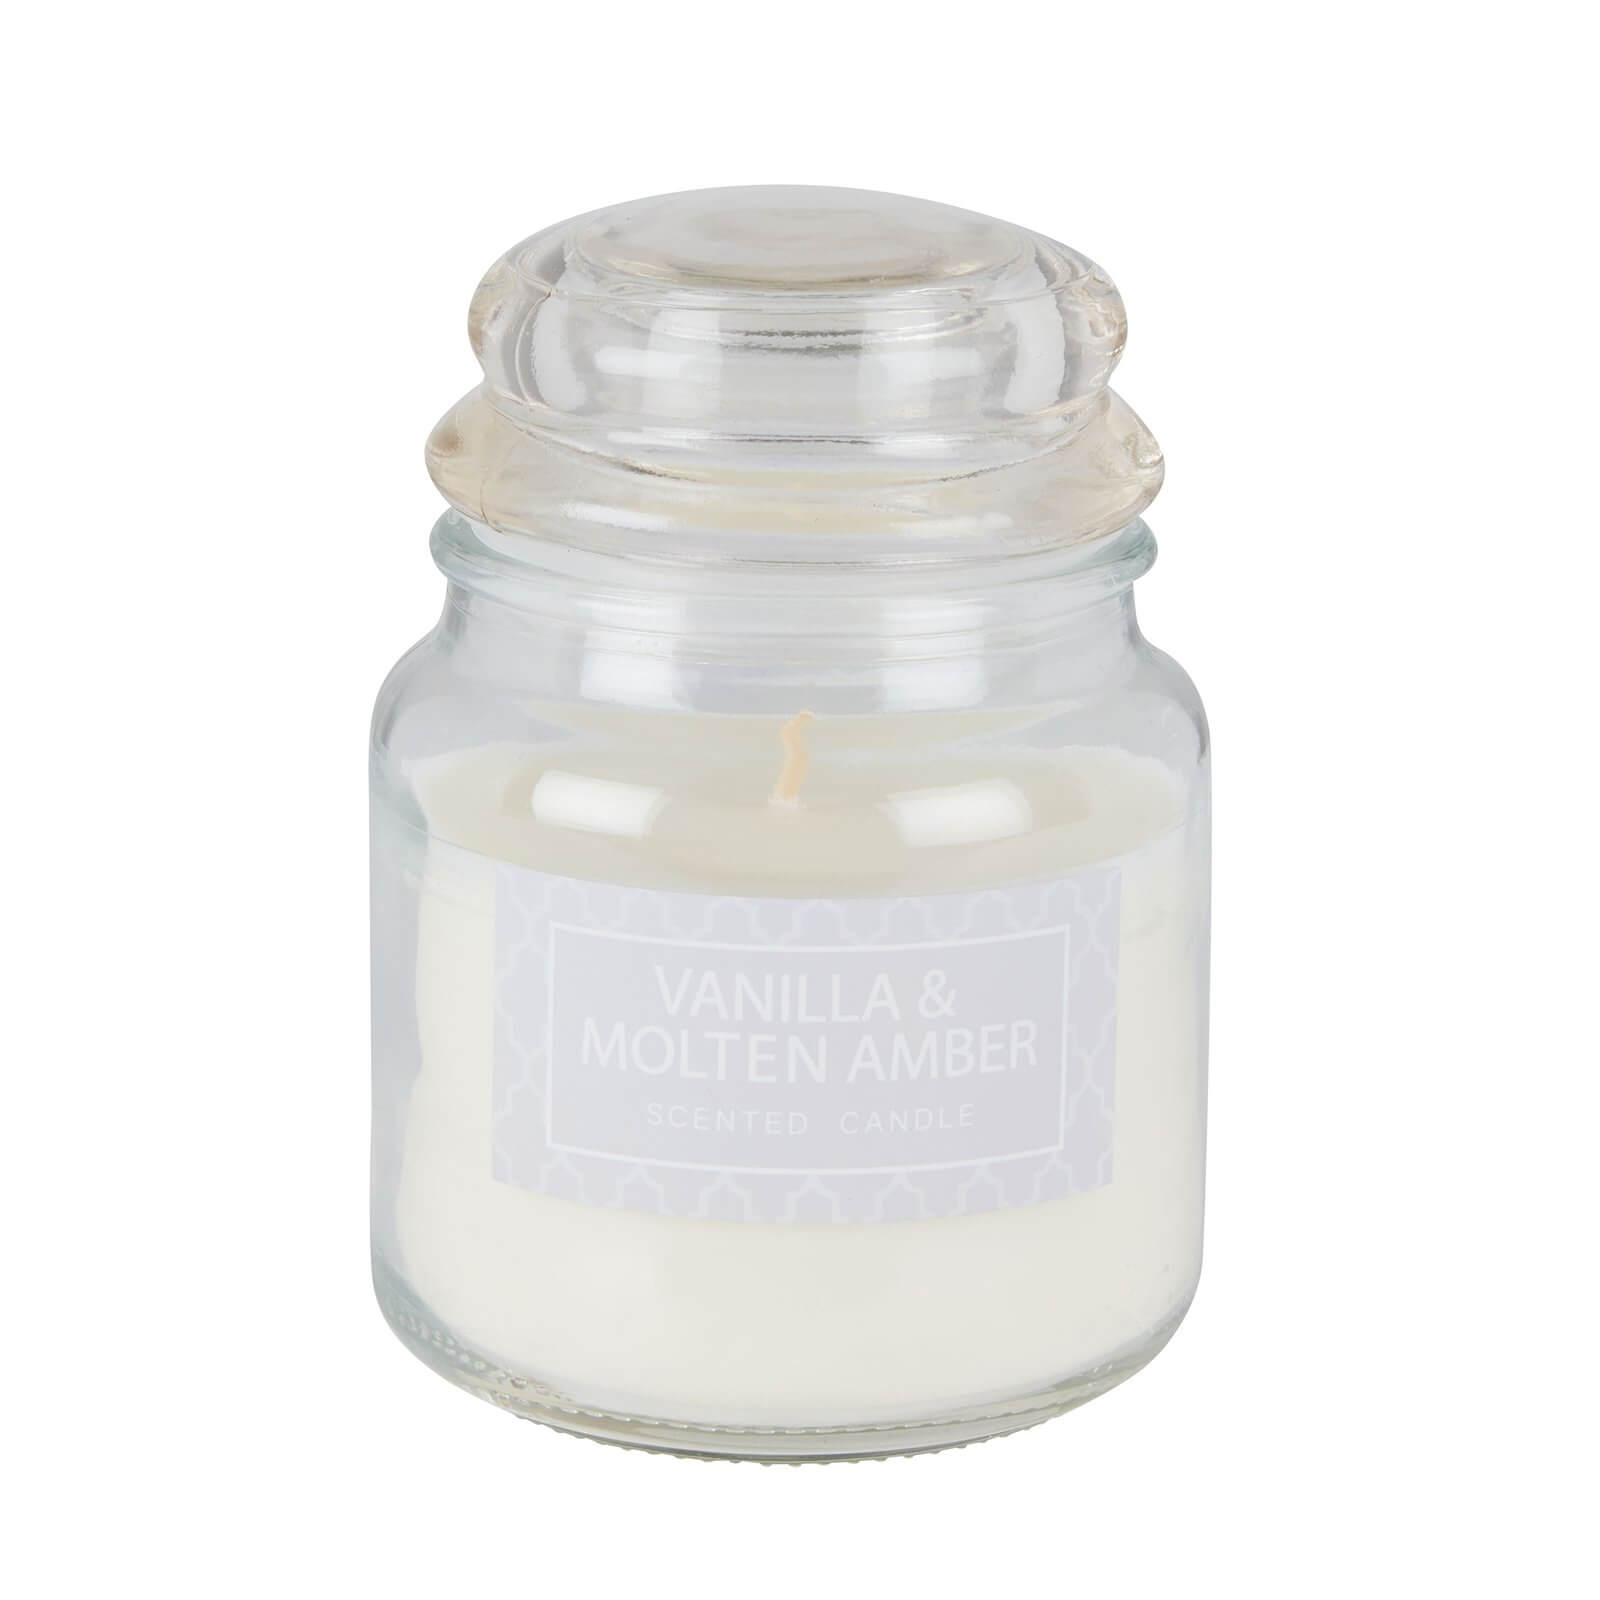 Vanilla & Molten Amber Jar Candle